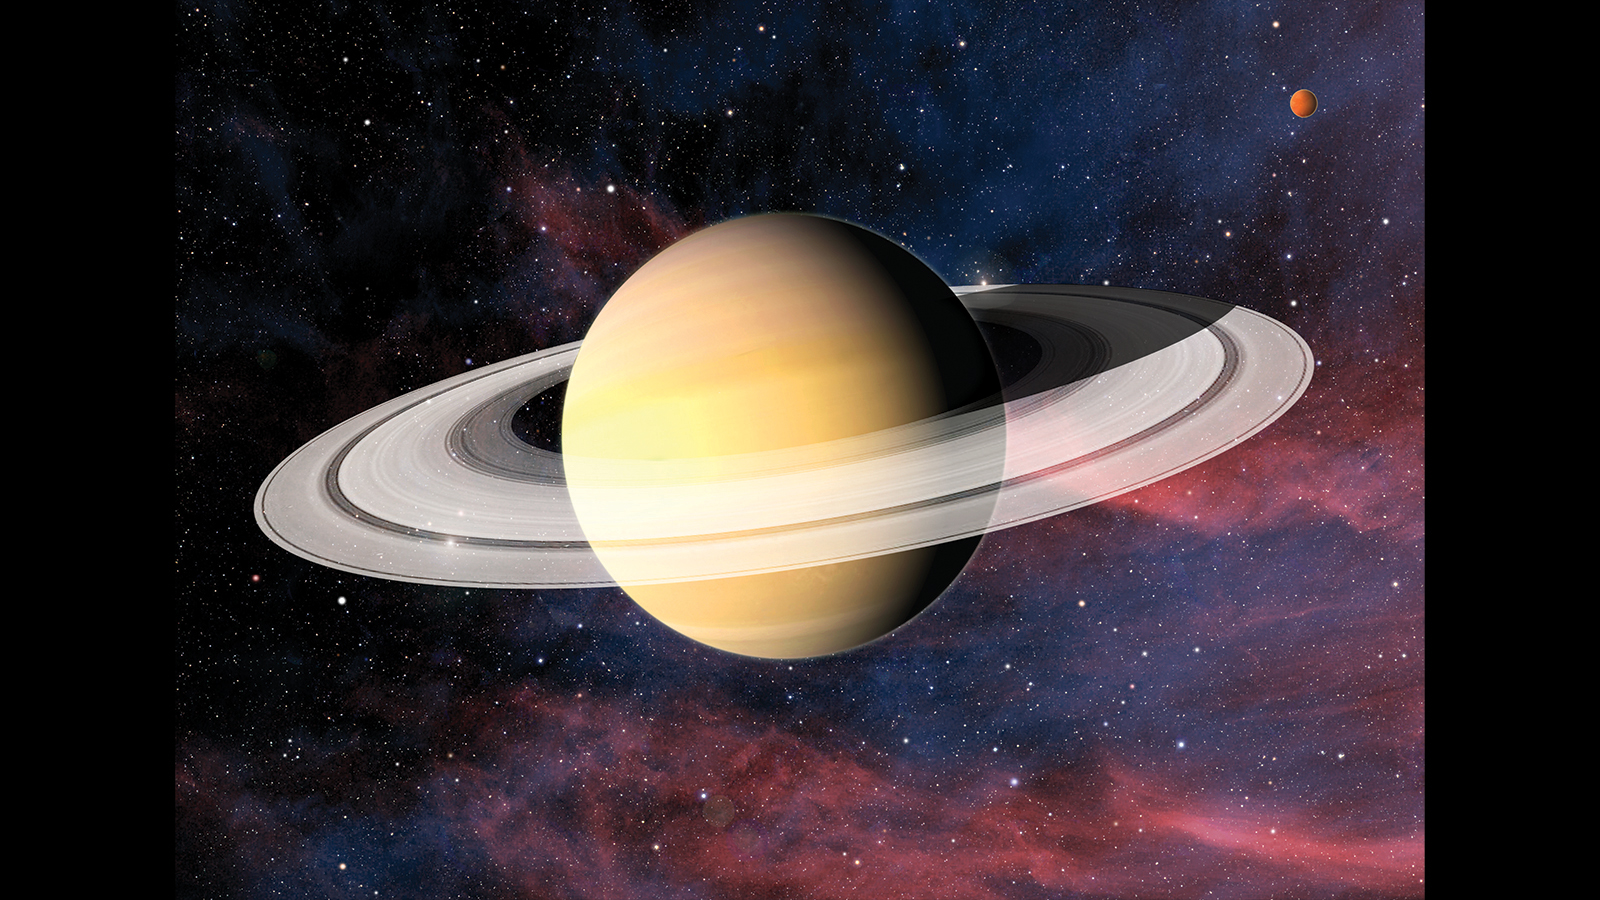 Saturn: The Ringworld